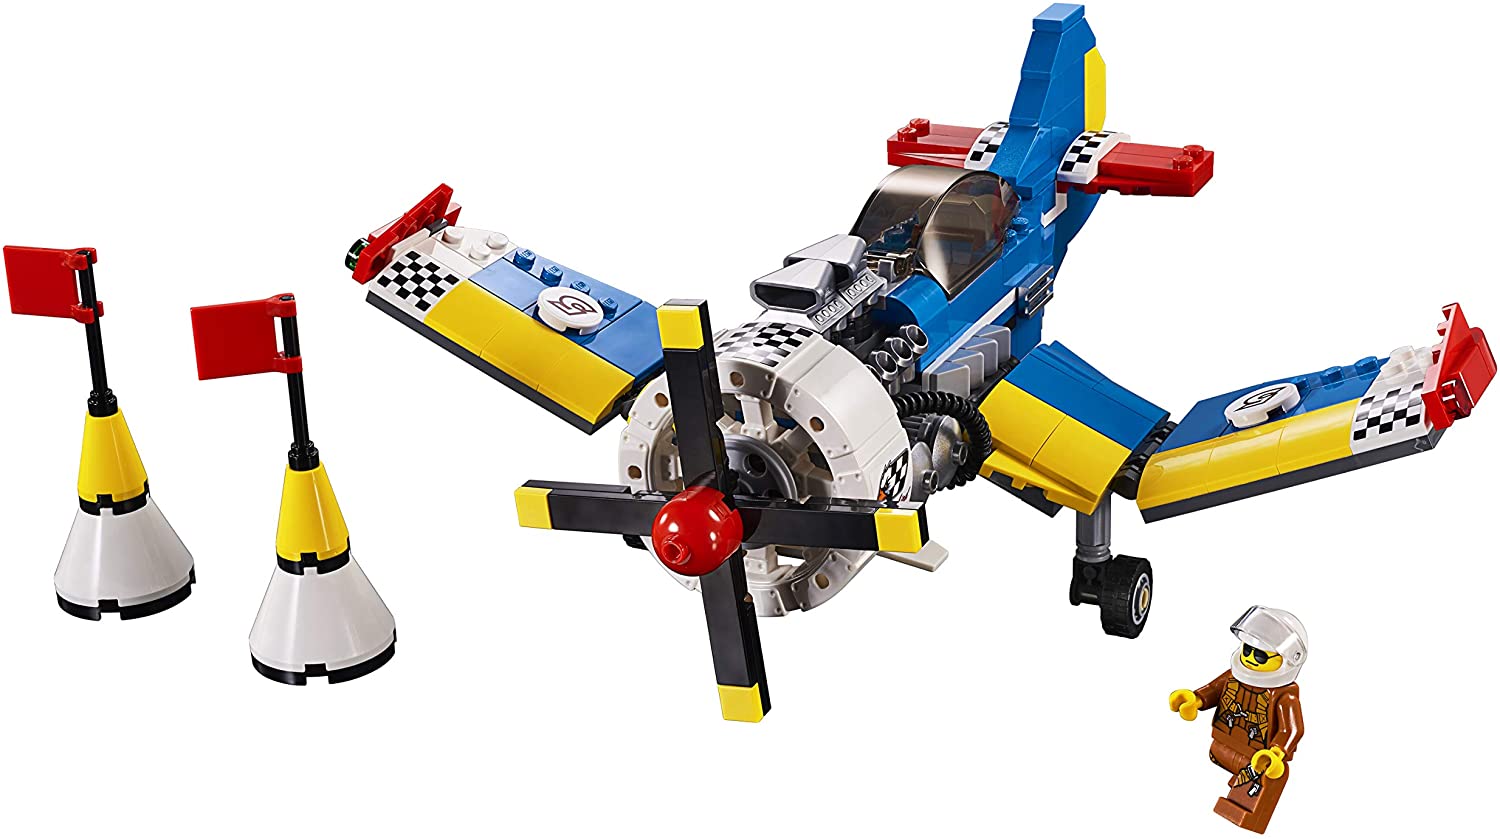 LEGO Creator Race Plane 31094